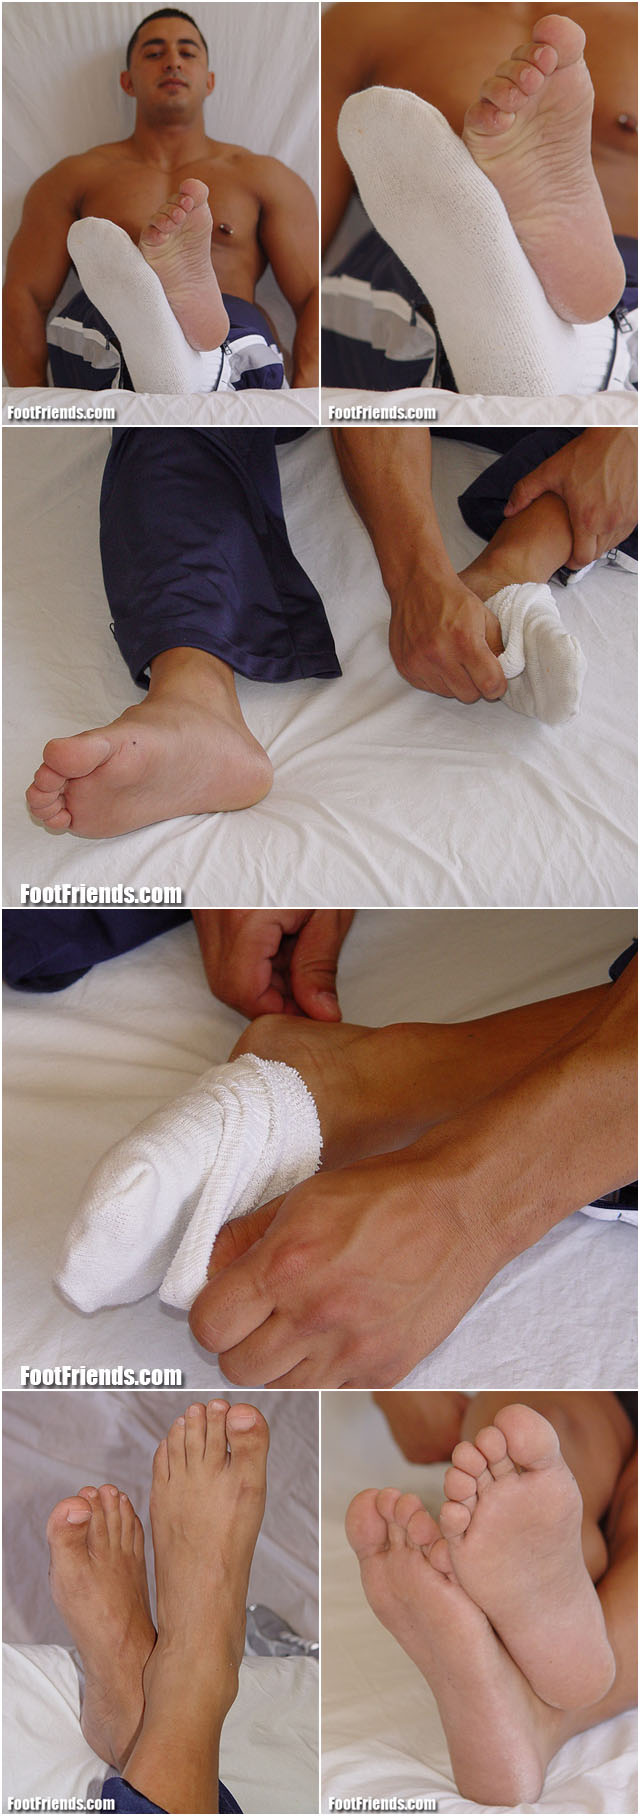 Amateur's bare masculine feet